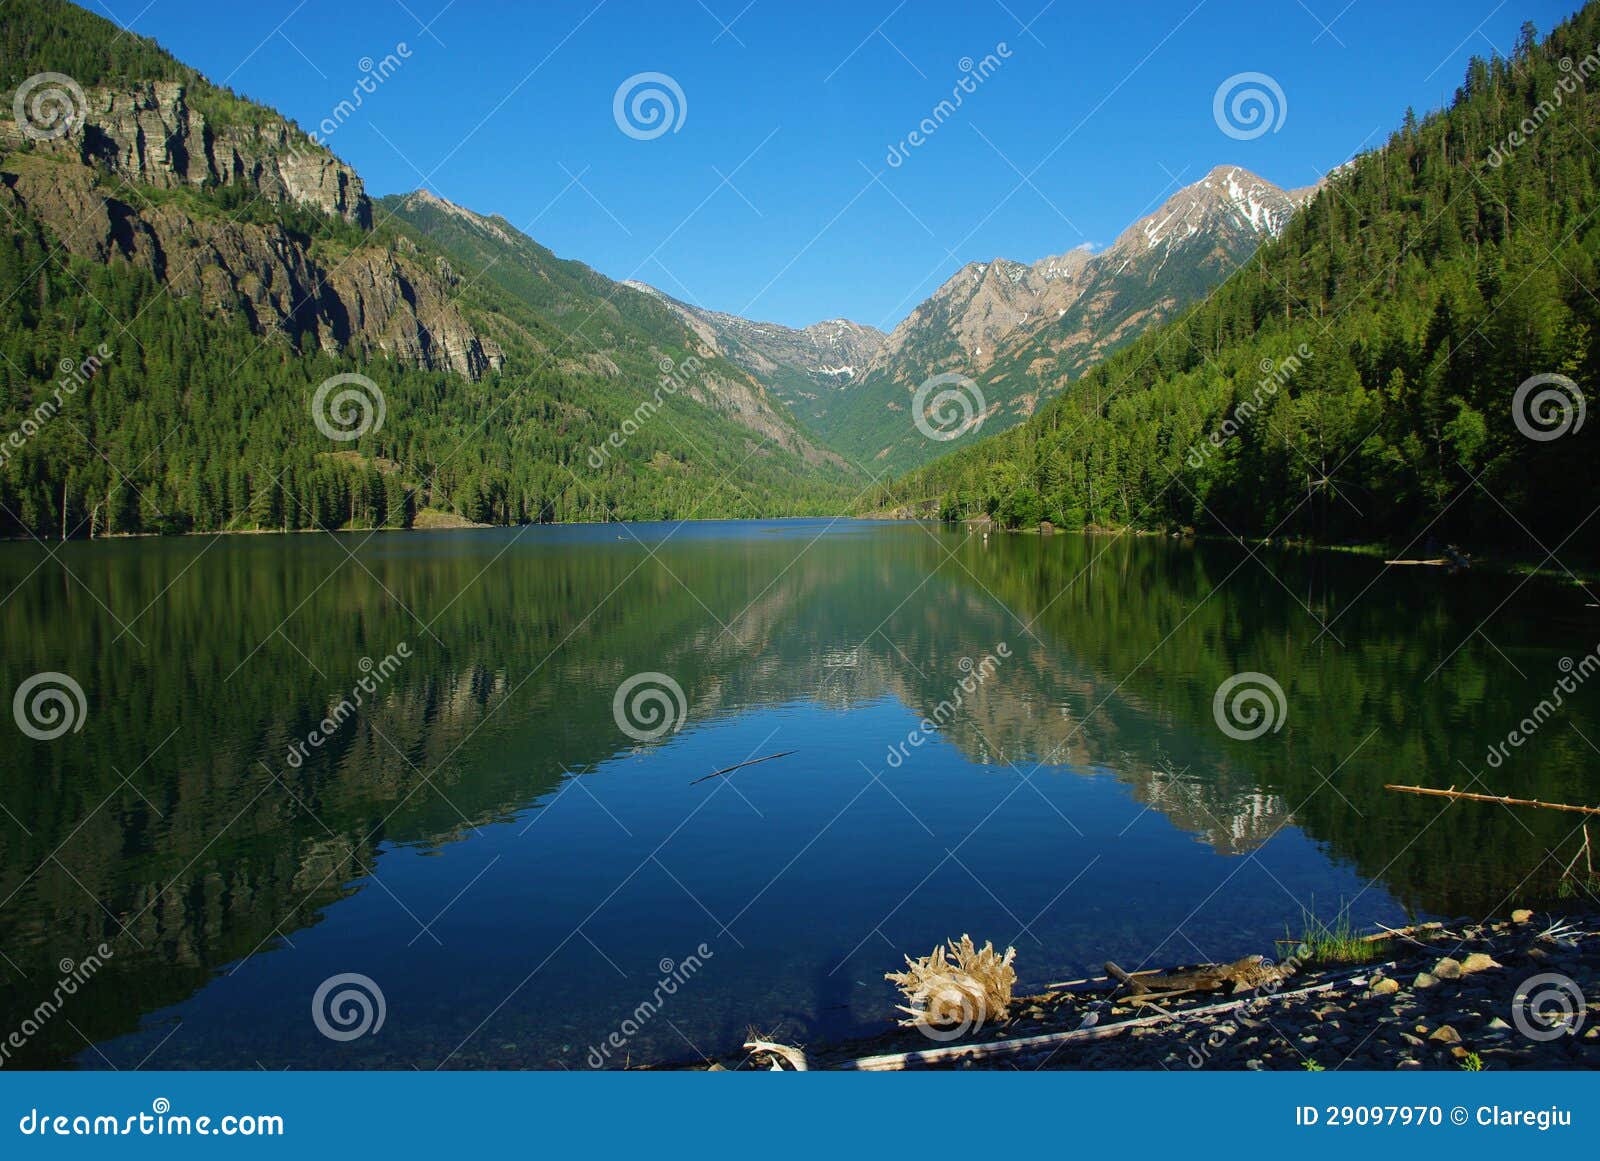 beautiful lake mcdonald, montana